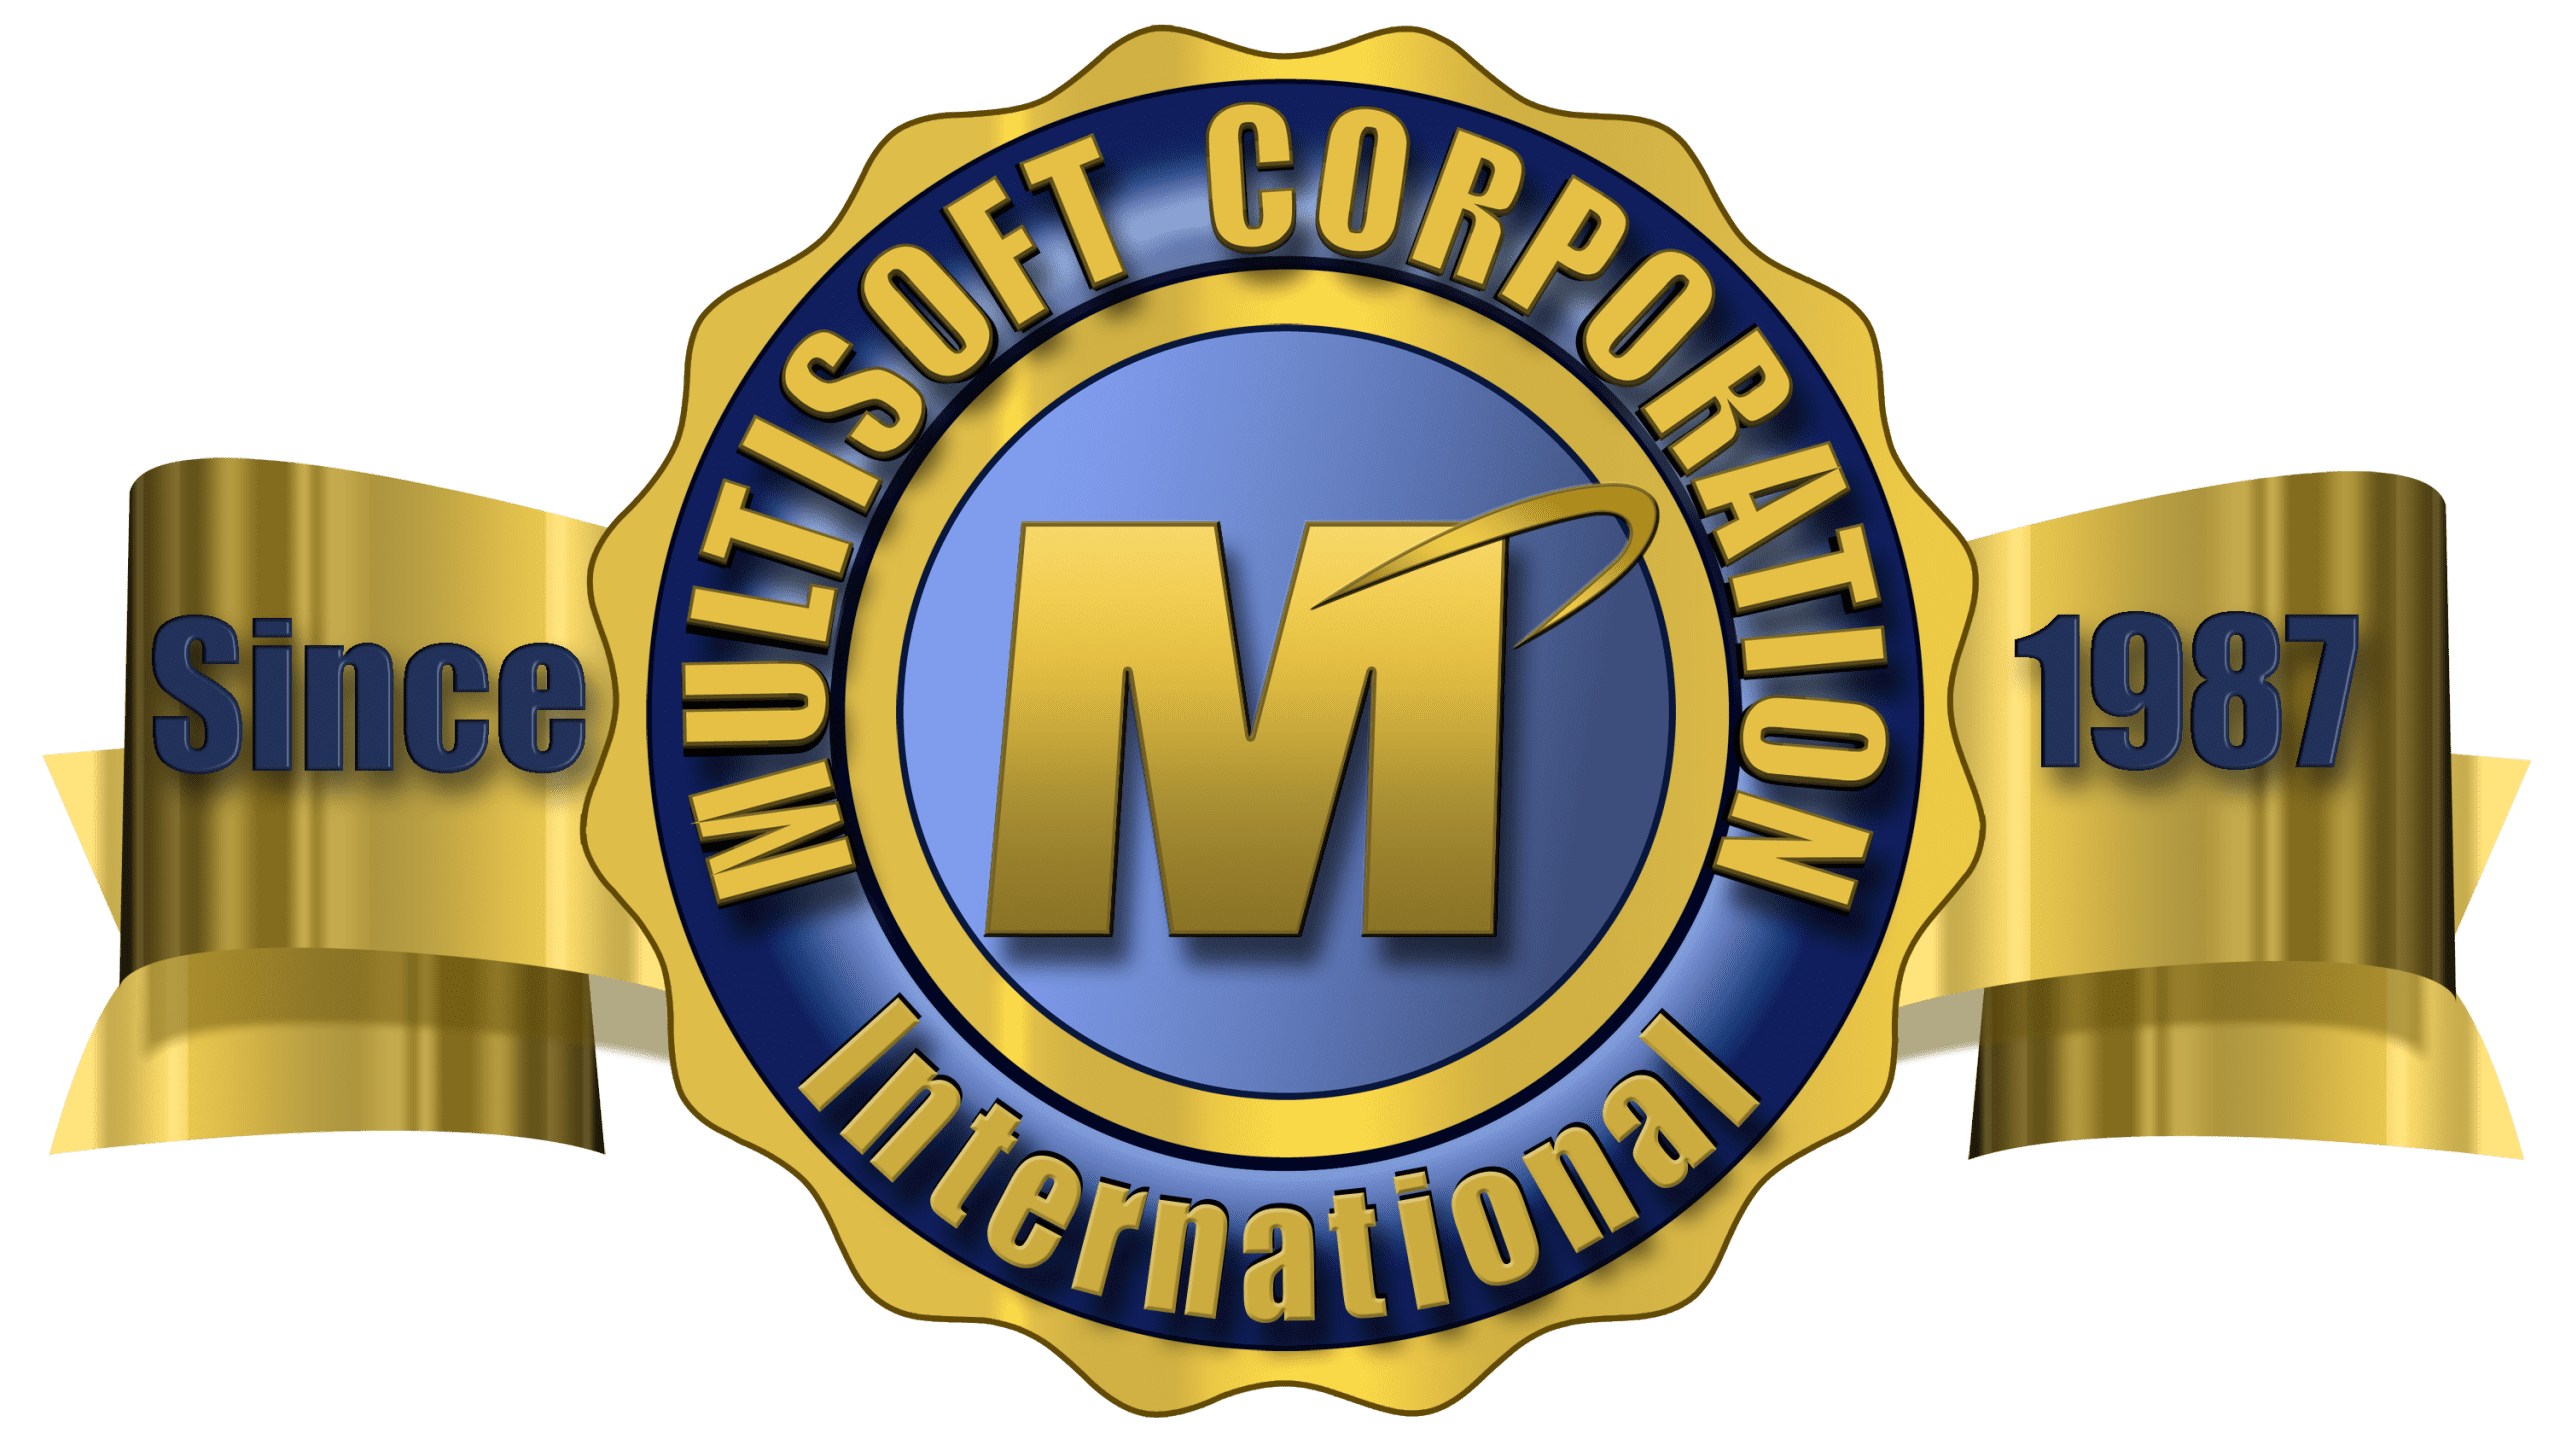 MultiSoft Las Vegas